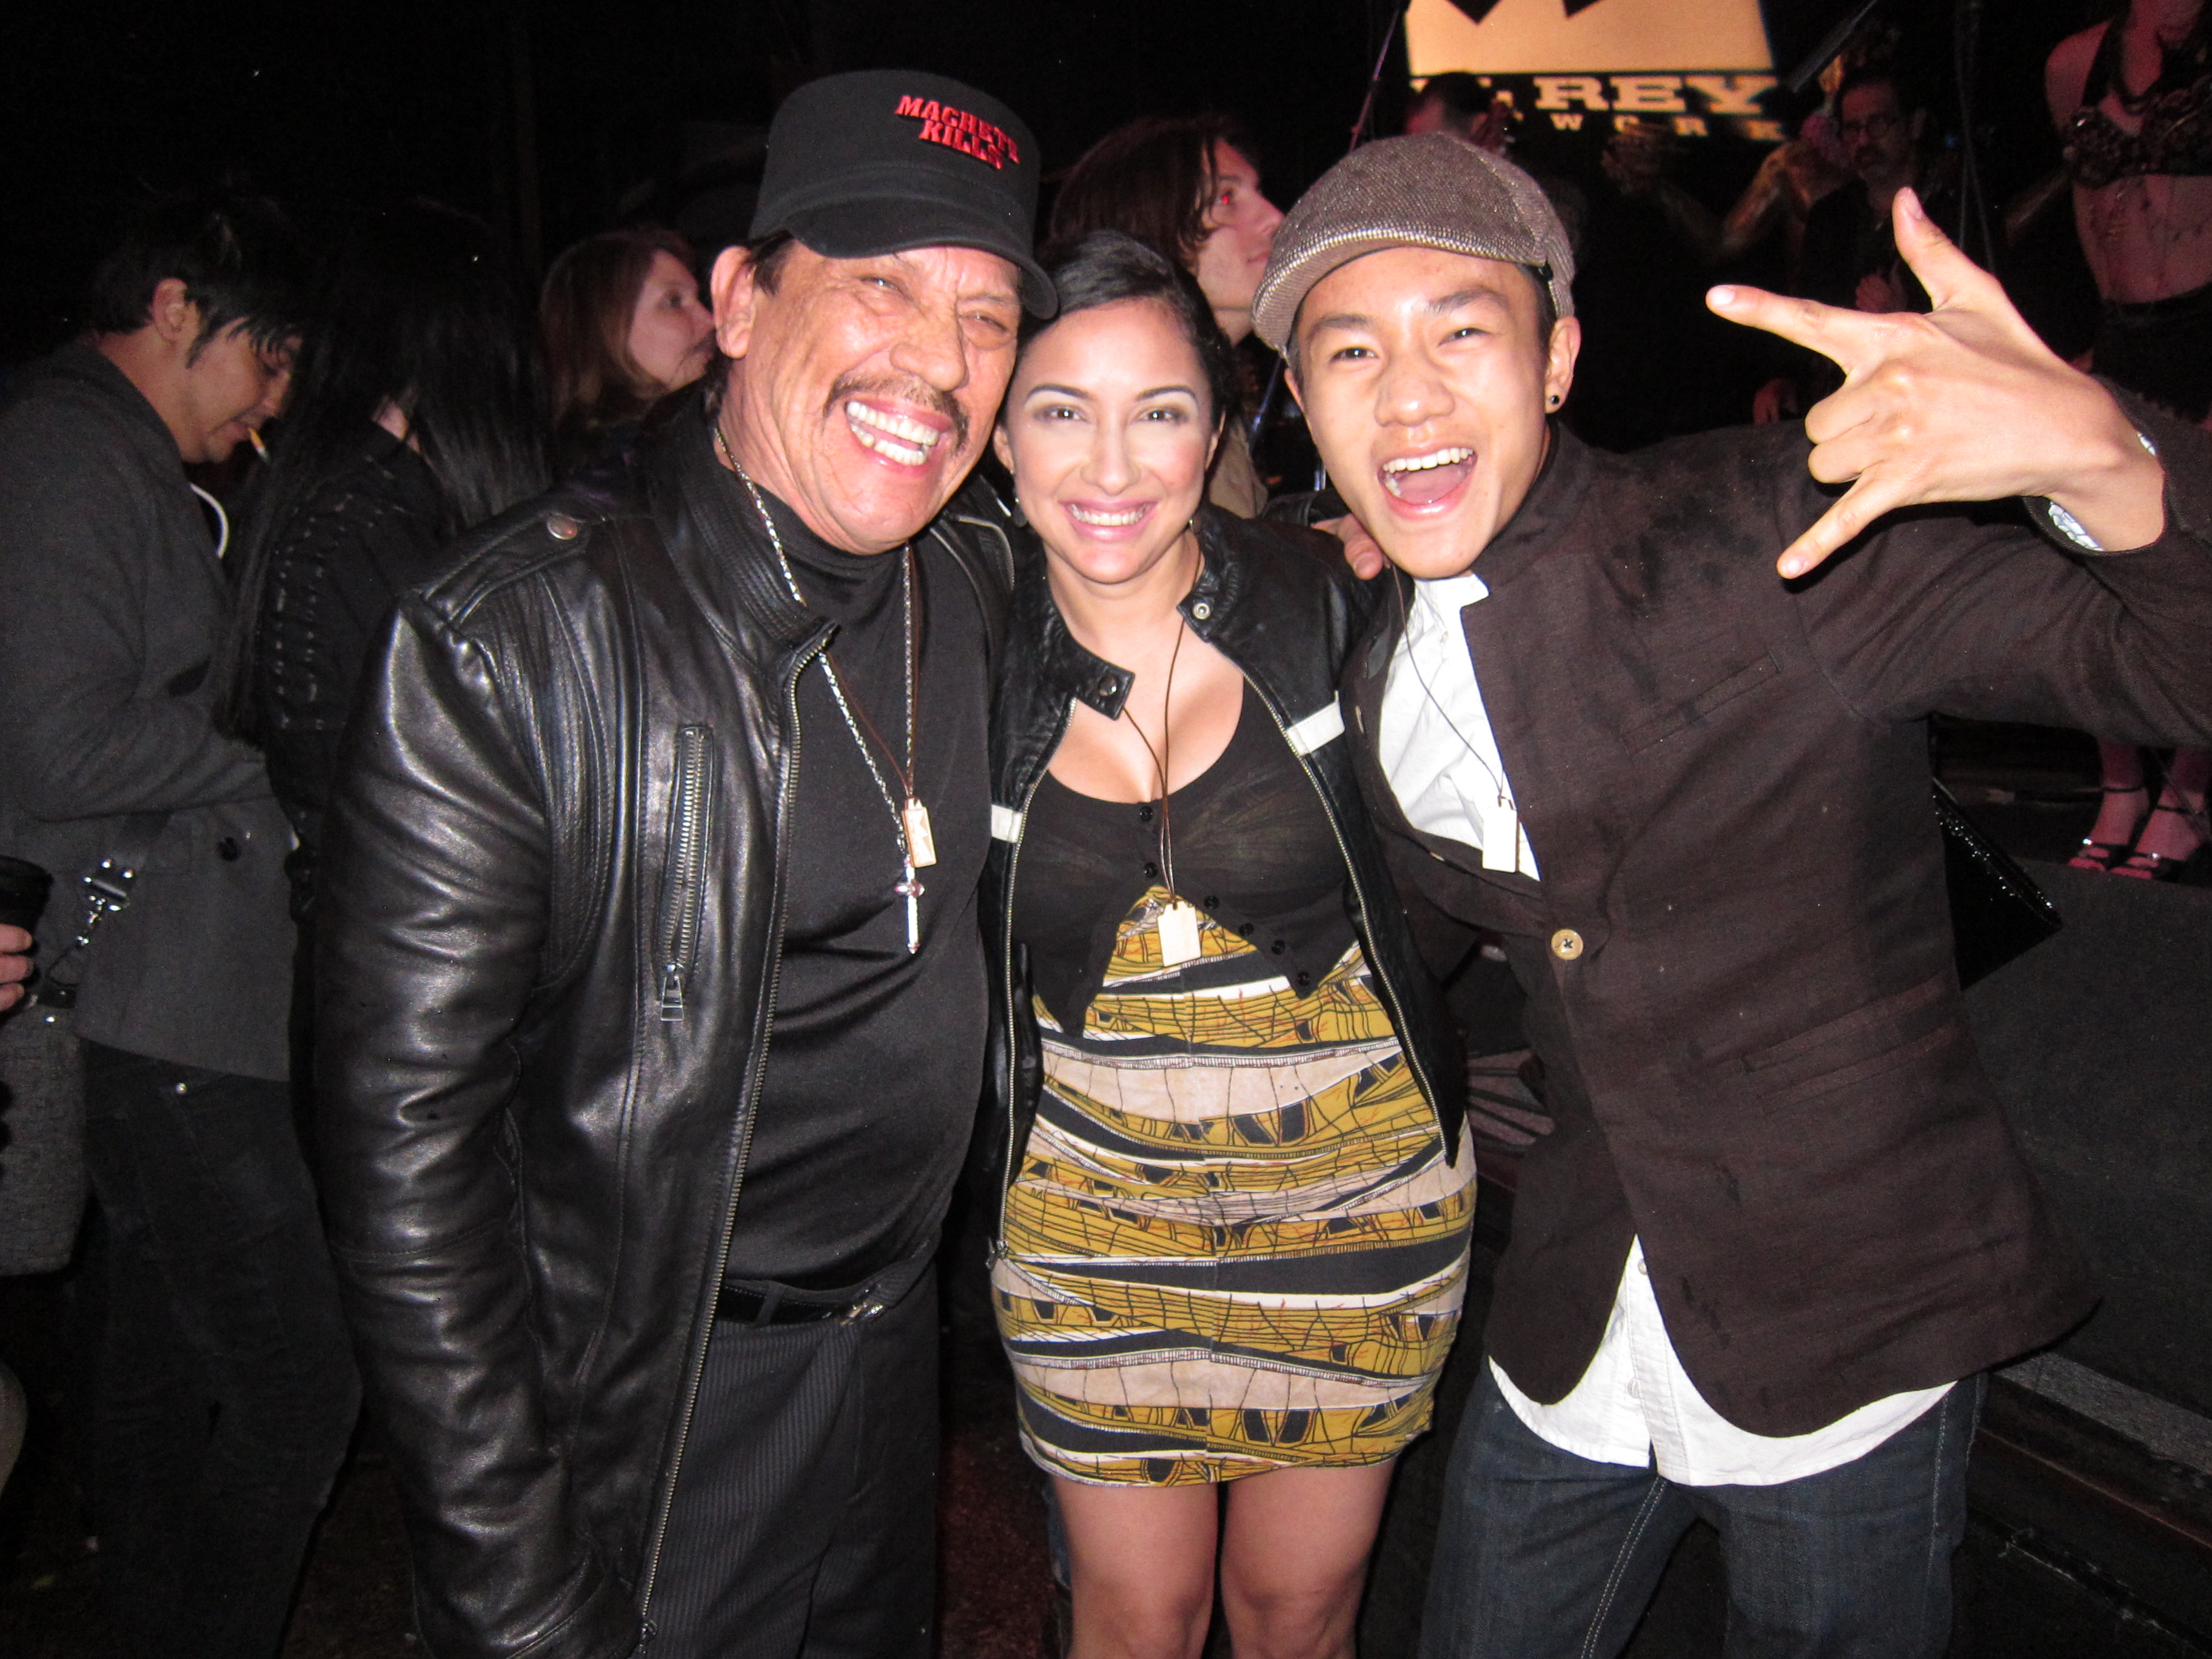 Brandon Soo Hoo & Danny Trejo at From Dusk Till Dawn After Party March 8, 2014 , Austin, Texas